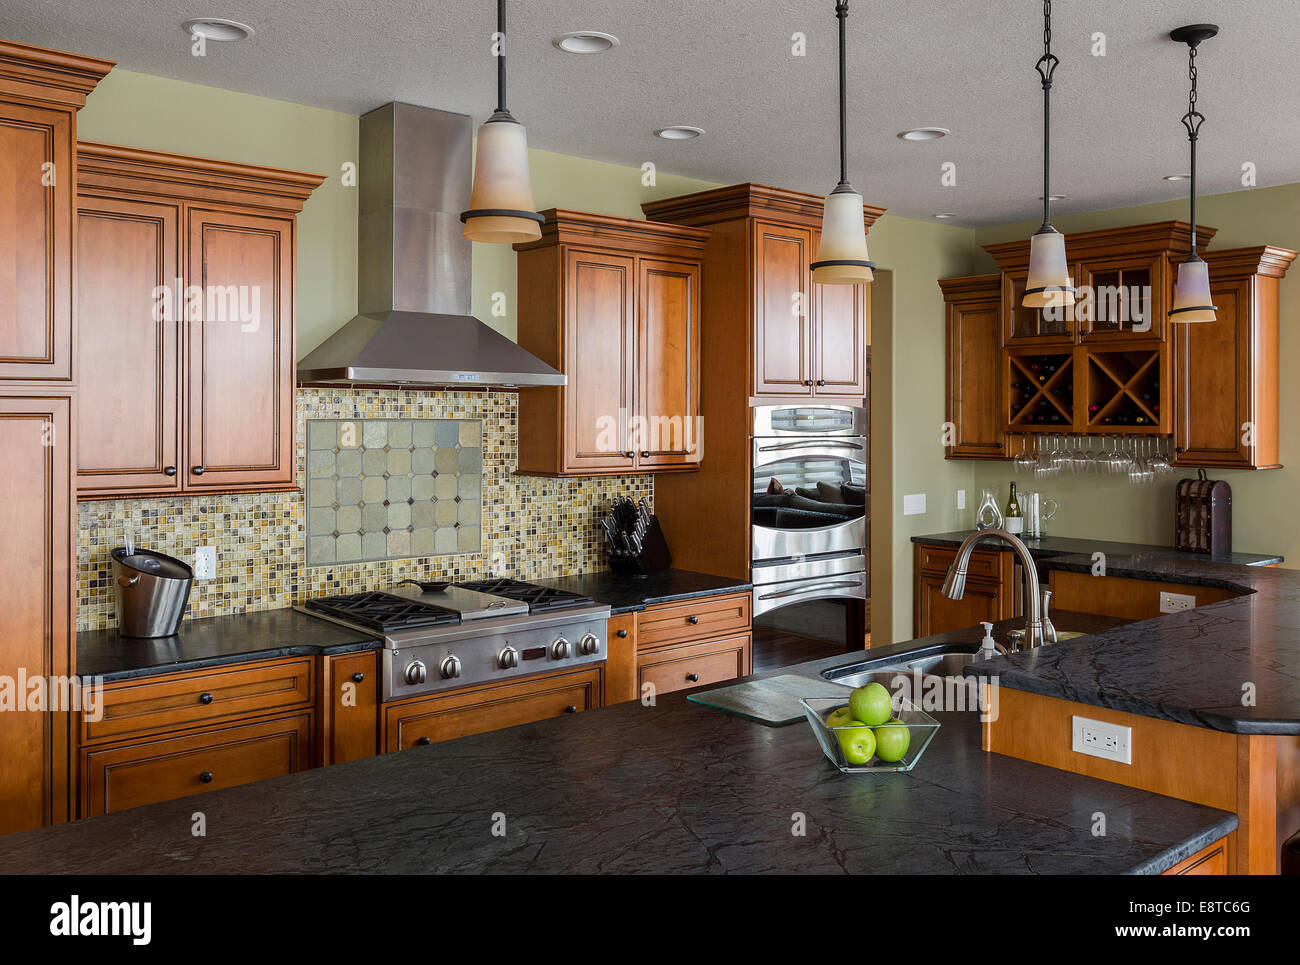 Tile back splash and island in kitchen Stock Photo